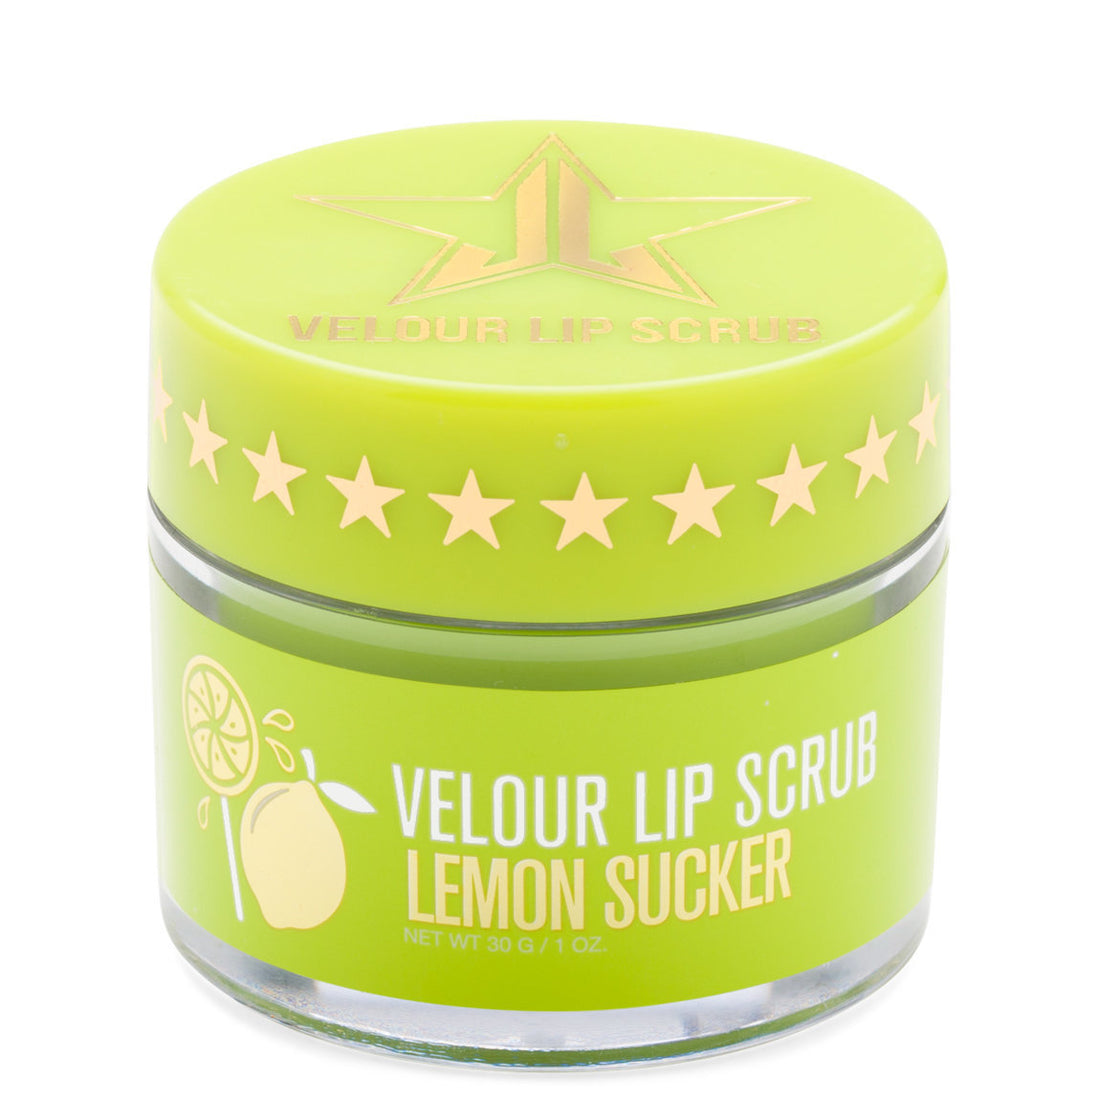 Velour Lip Scrub - Lemon Sucker